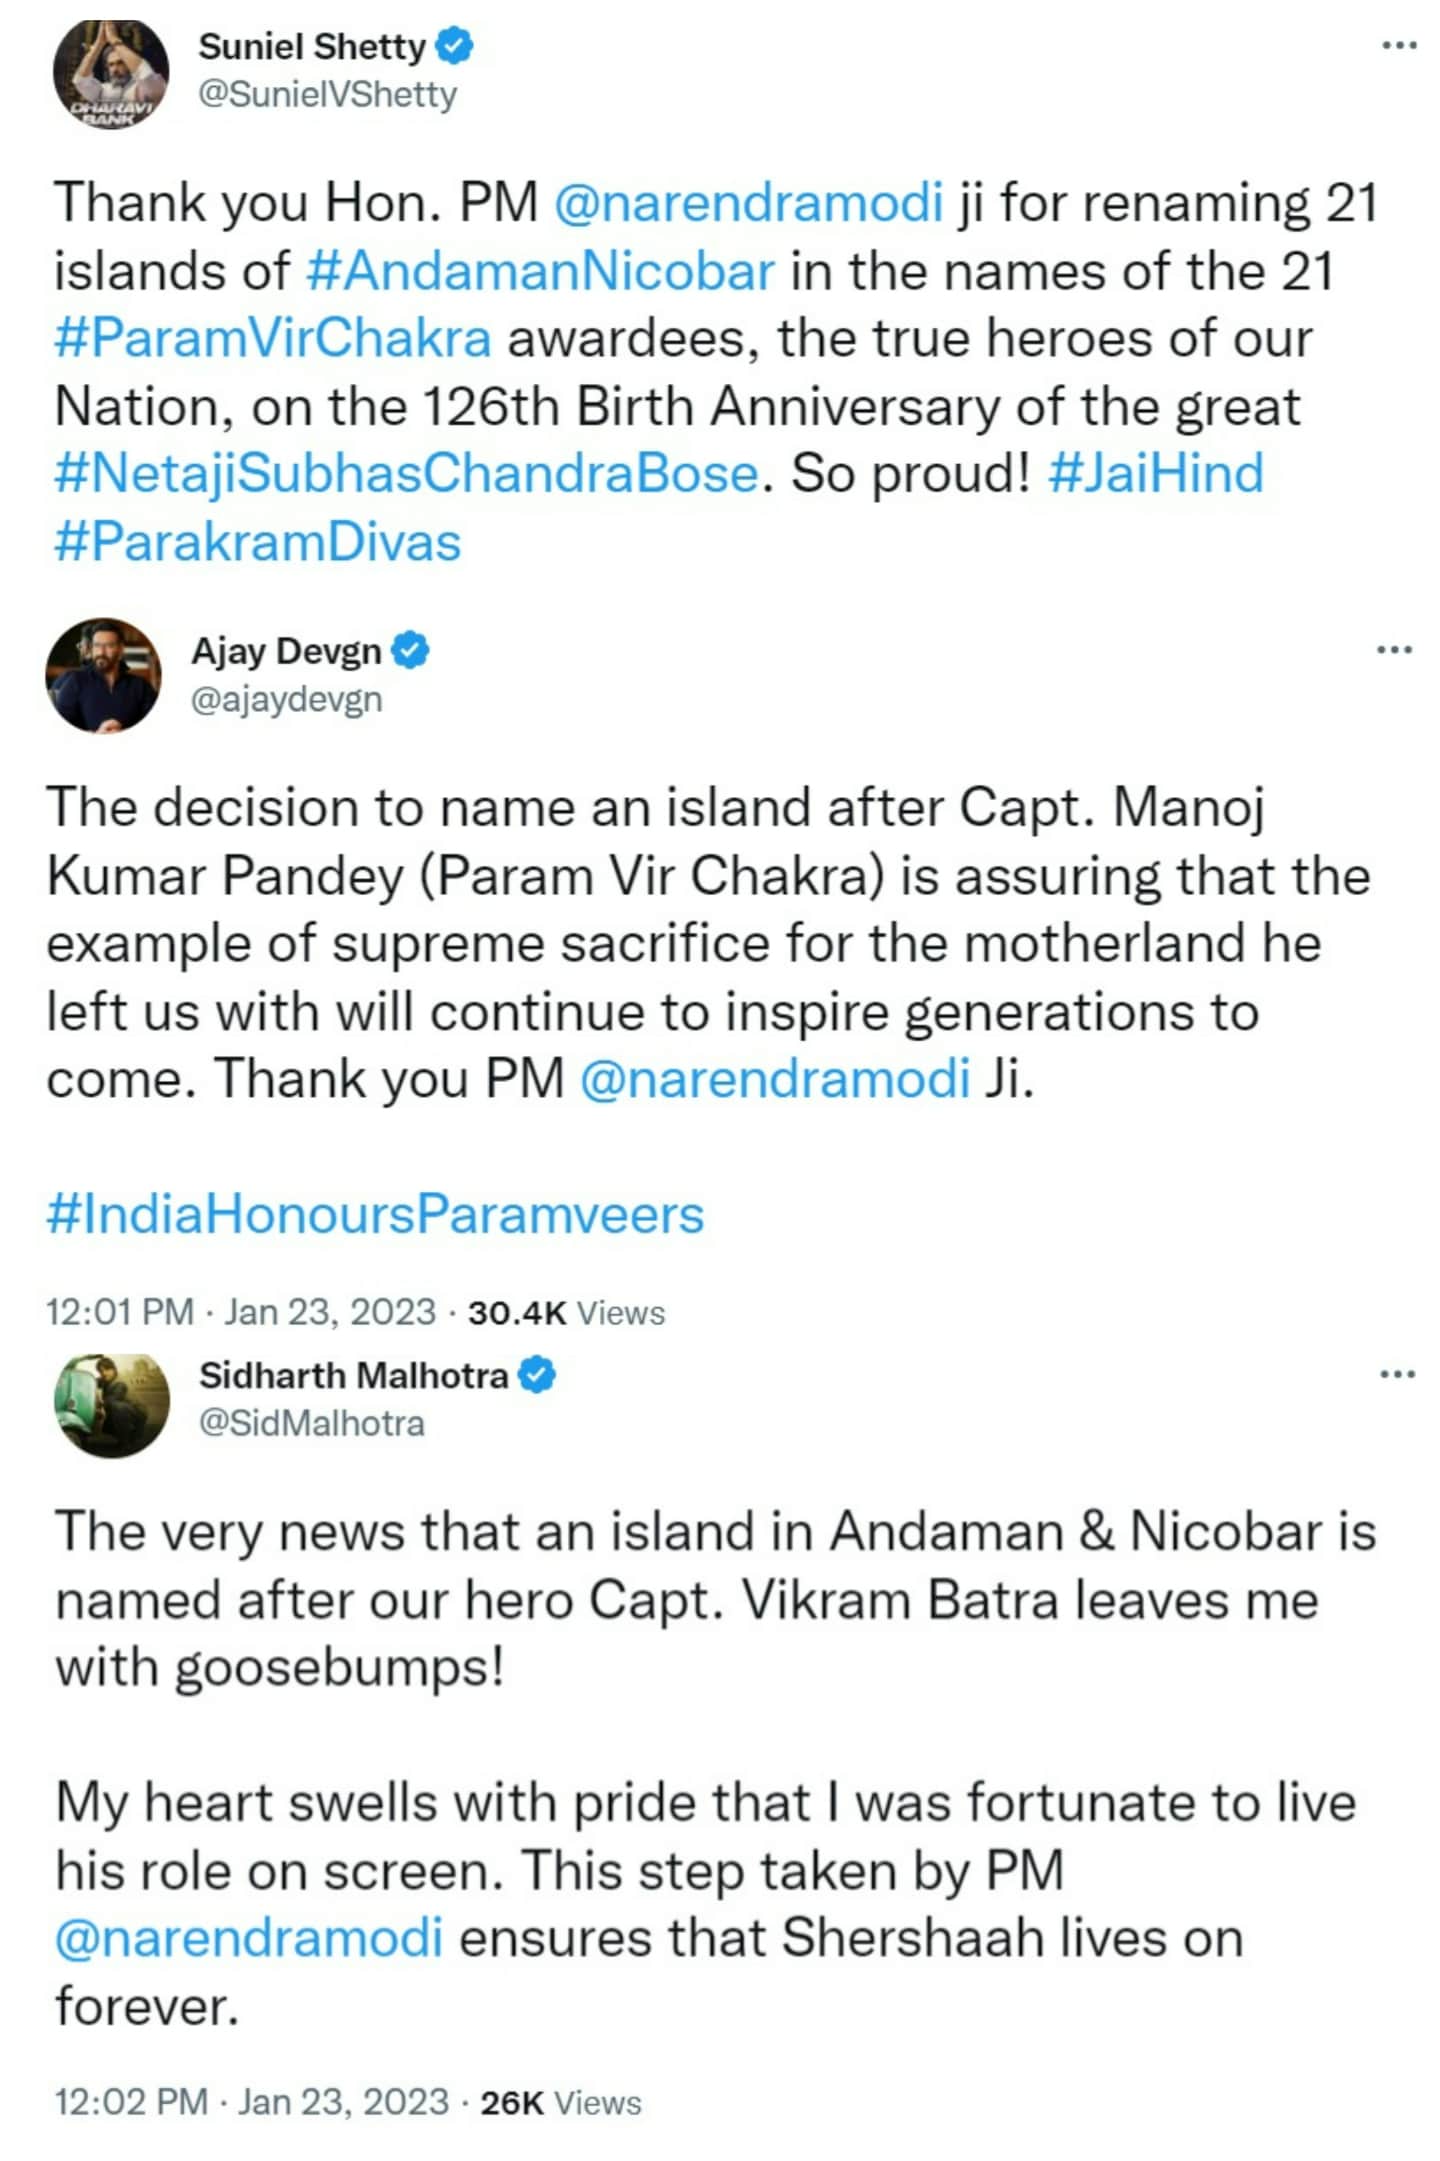 Suniel Shetty, Ajay Devgn and Sidharth Malhotra tweeted as Andaman & Nicobar Islands were named.